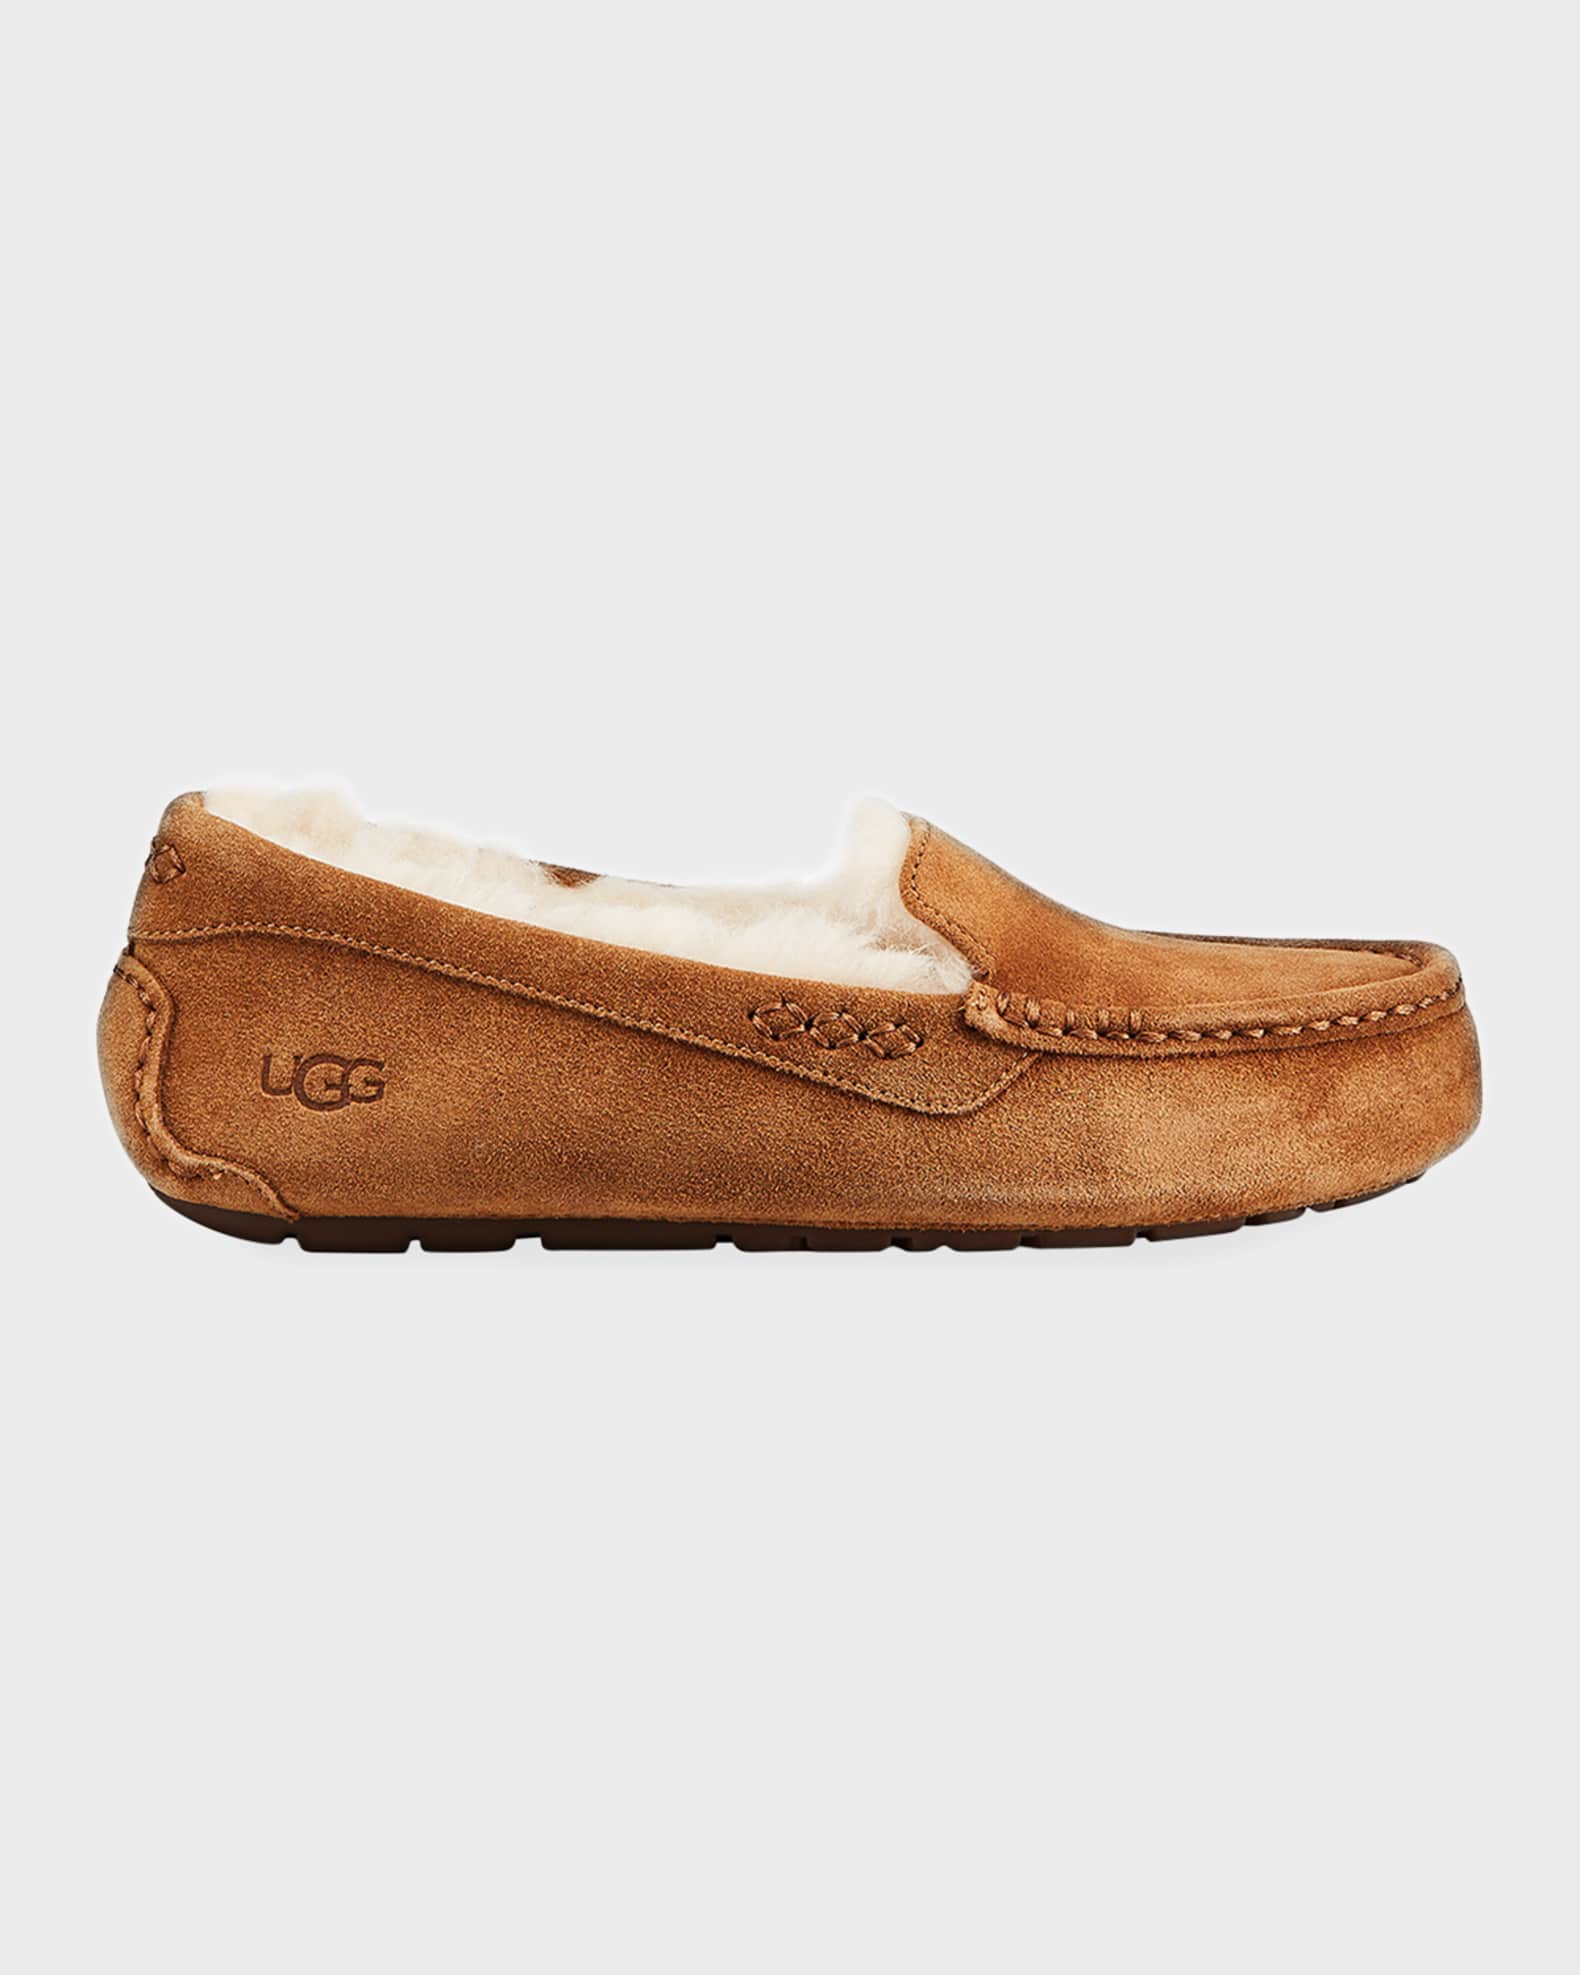 UGG Water-Resistant Slippers | Neiman Marcus